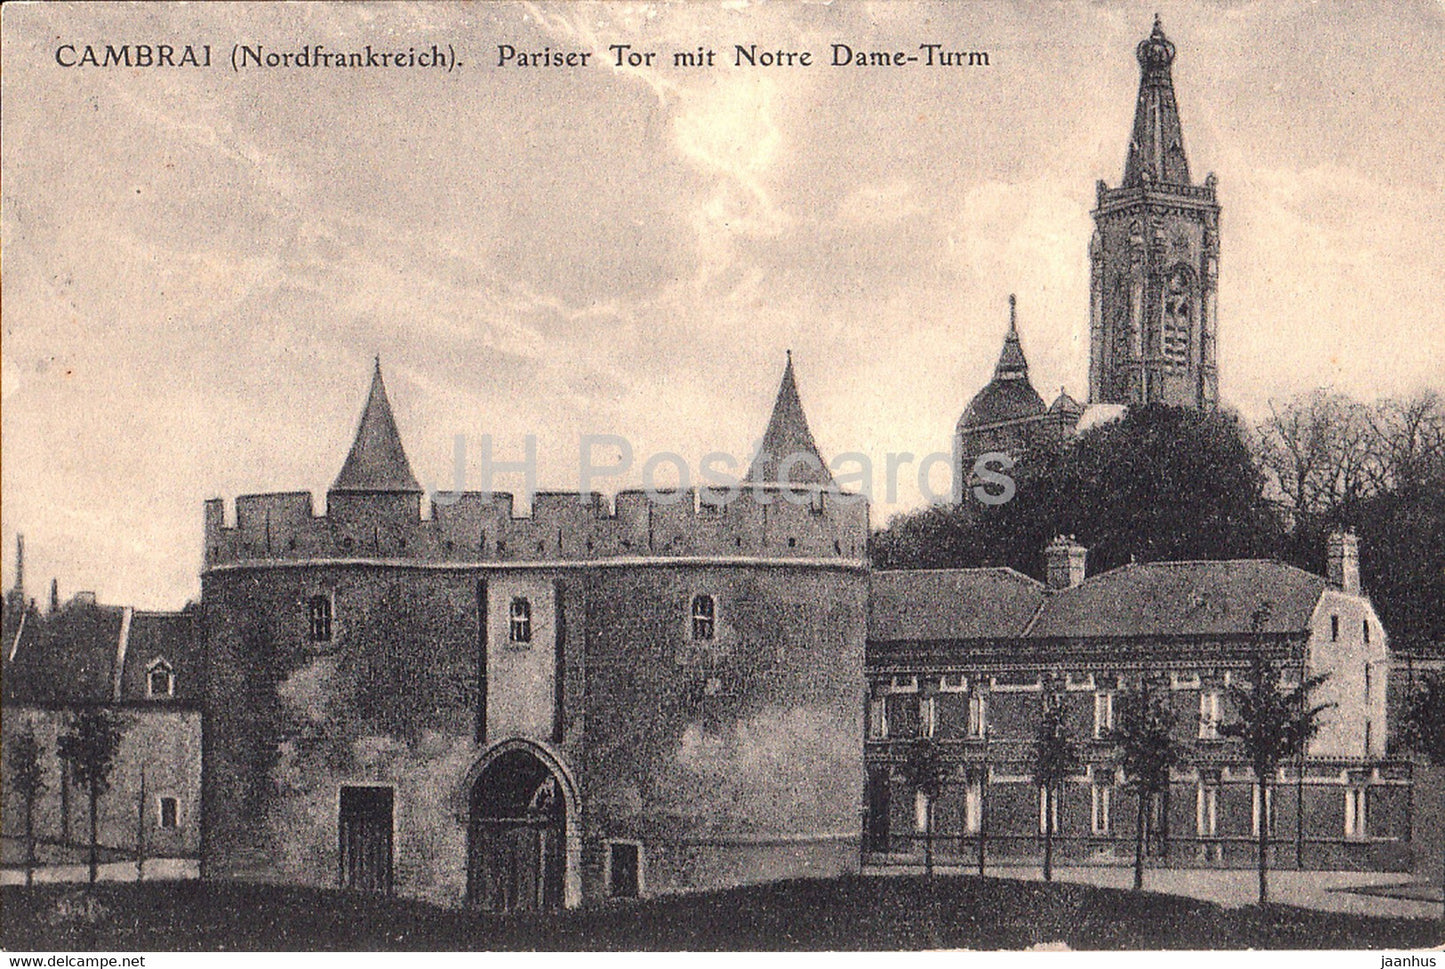 Cambrai - Pariser Tor mit Notre Dame Turm - old postcard - Feldpost - 1916 - France - used - JH Postcards